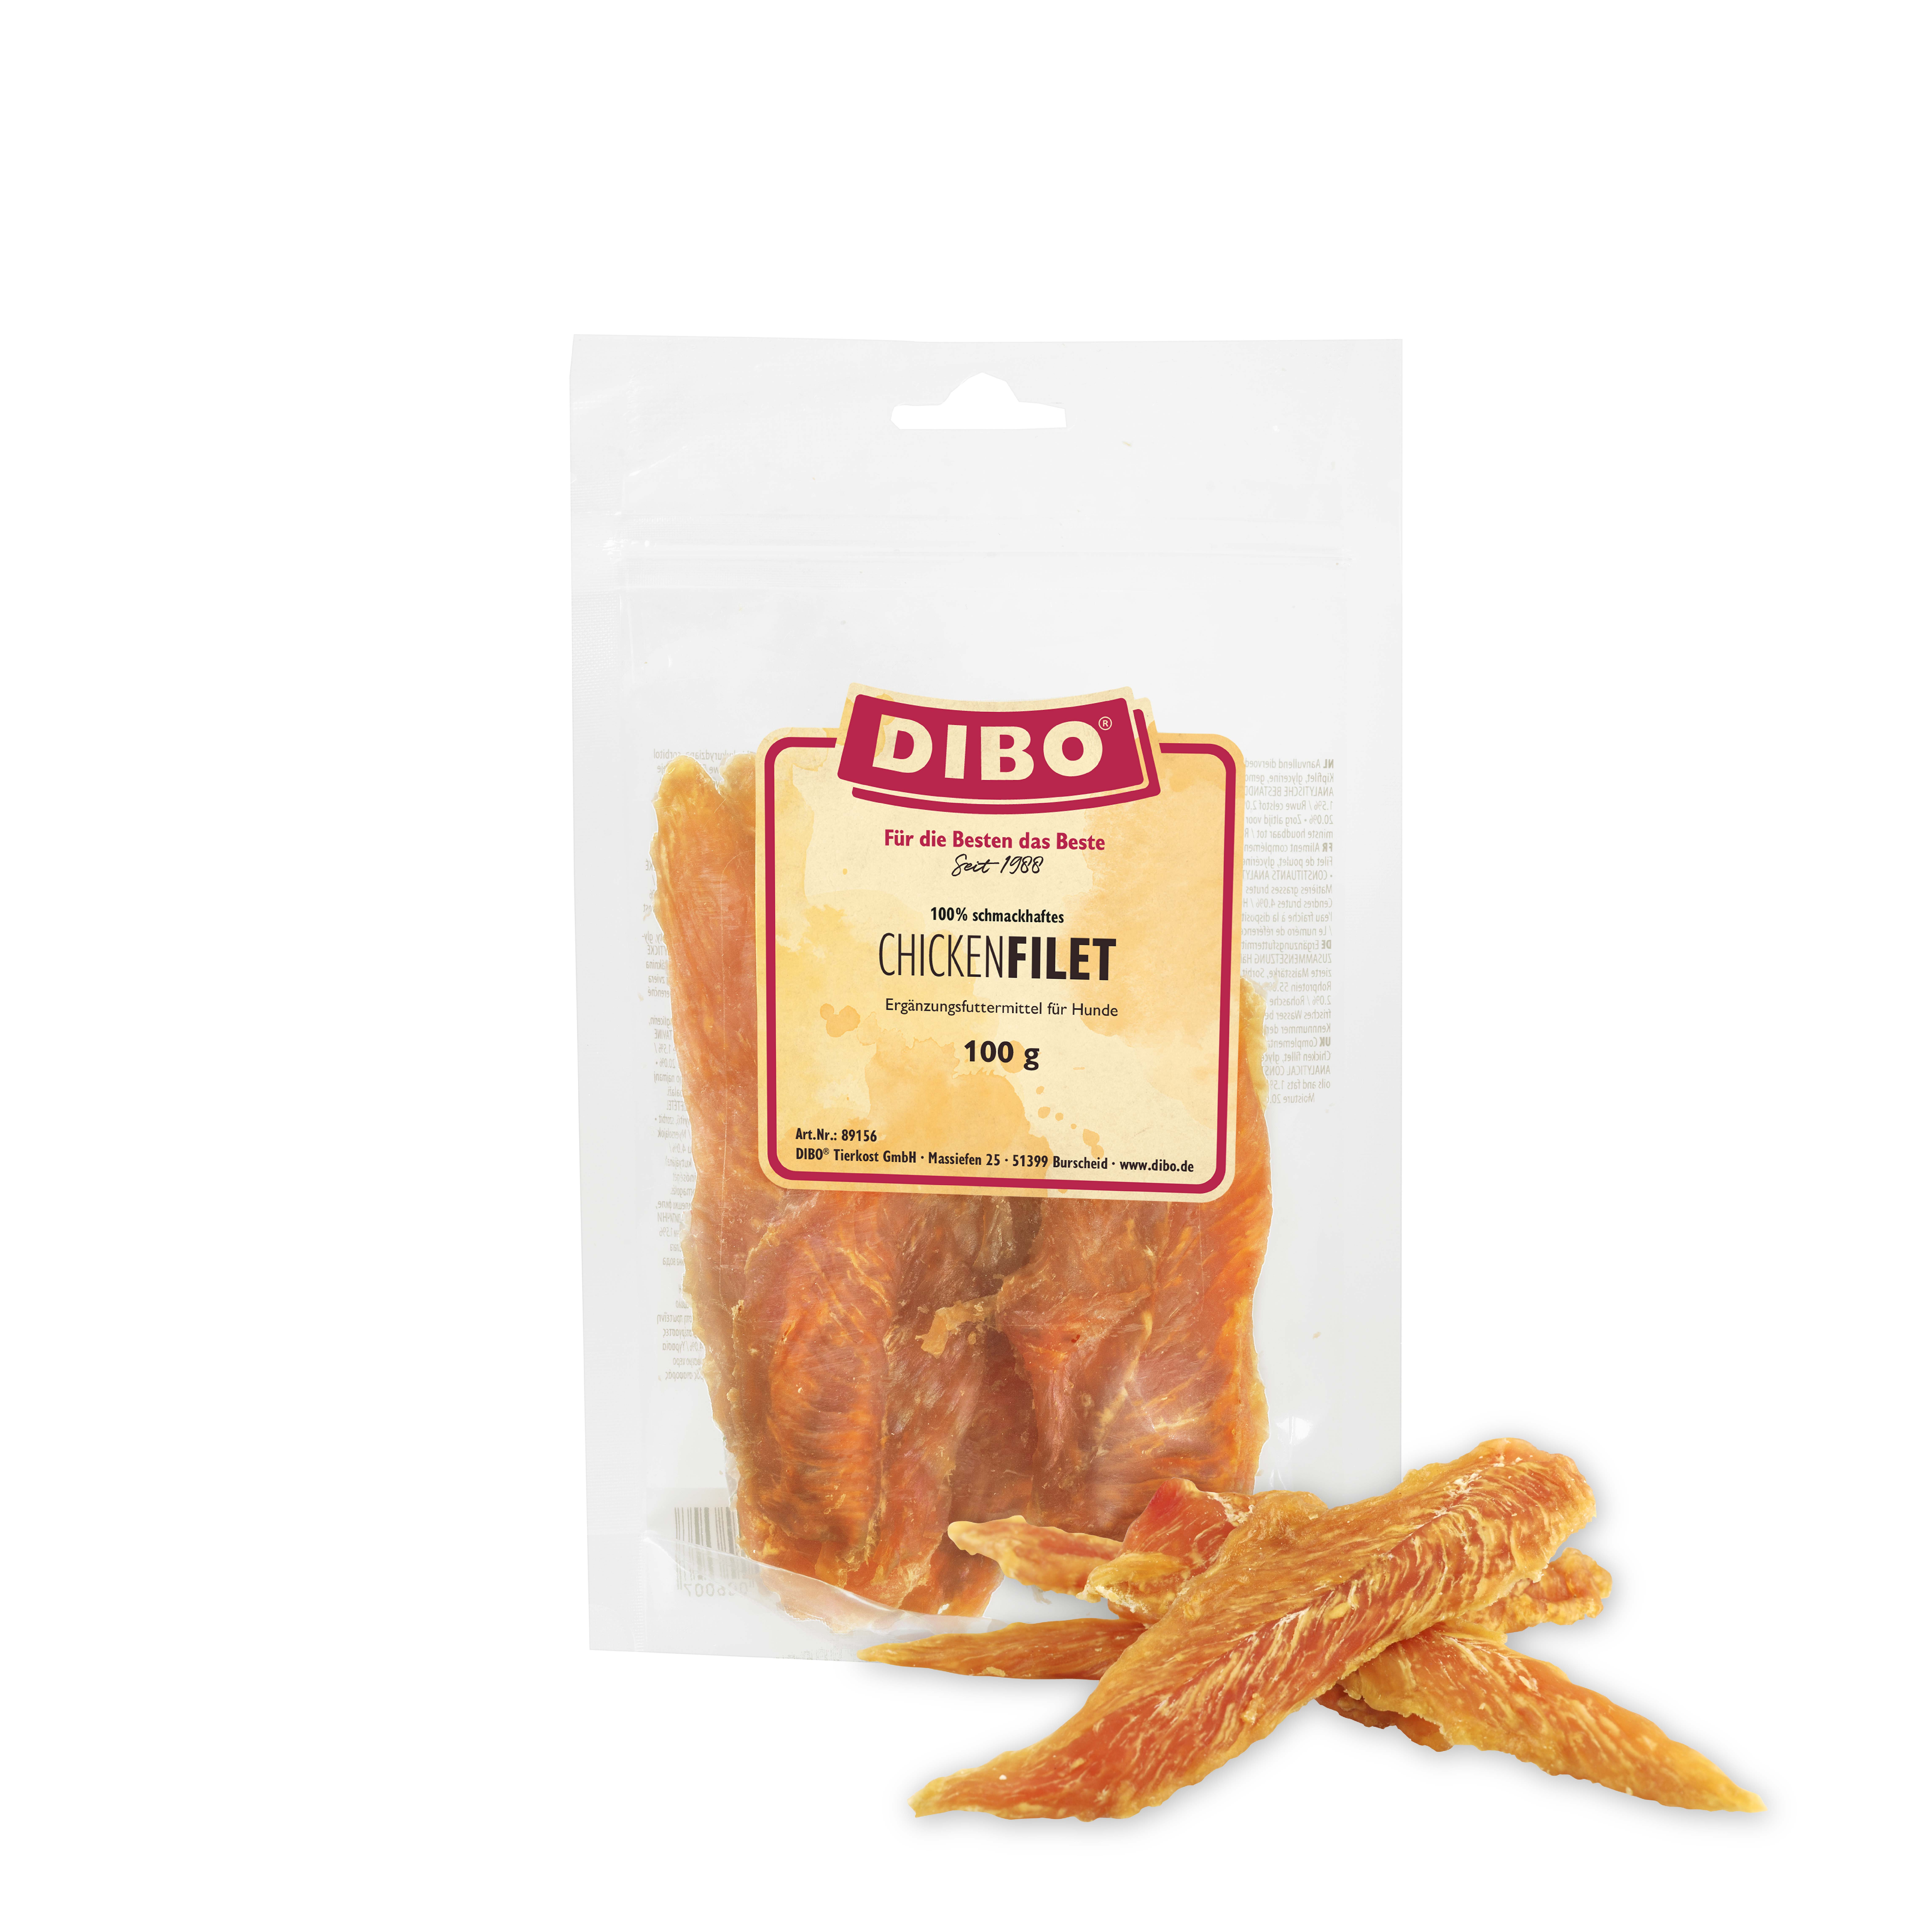 DIBO Chicken Filet, 100g-Beutel